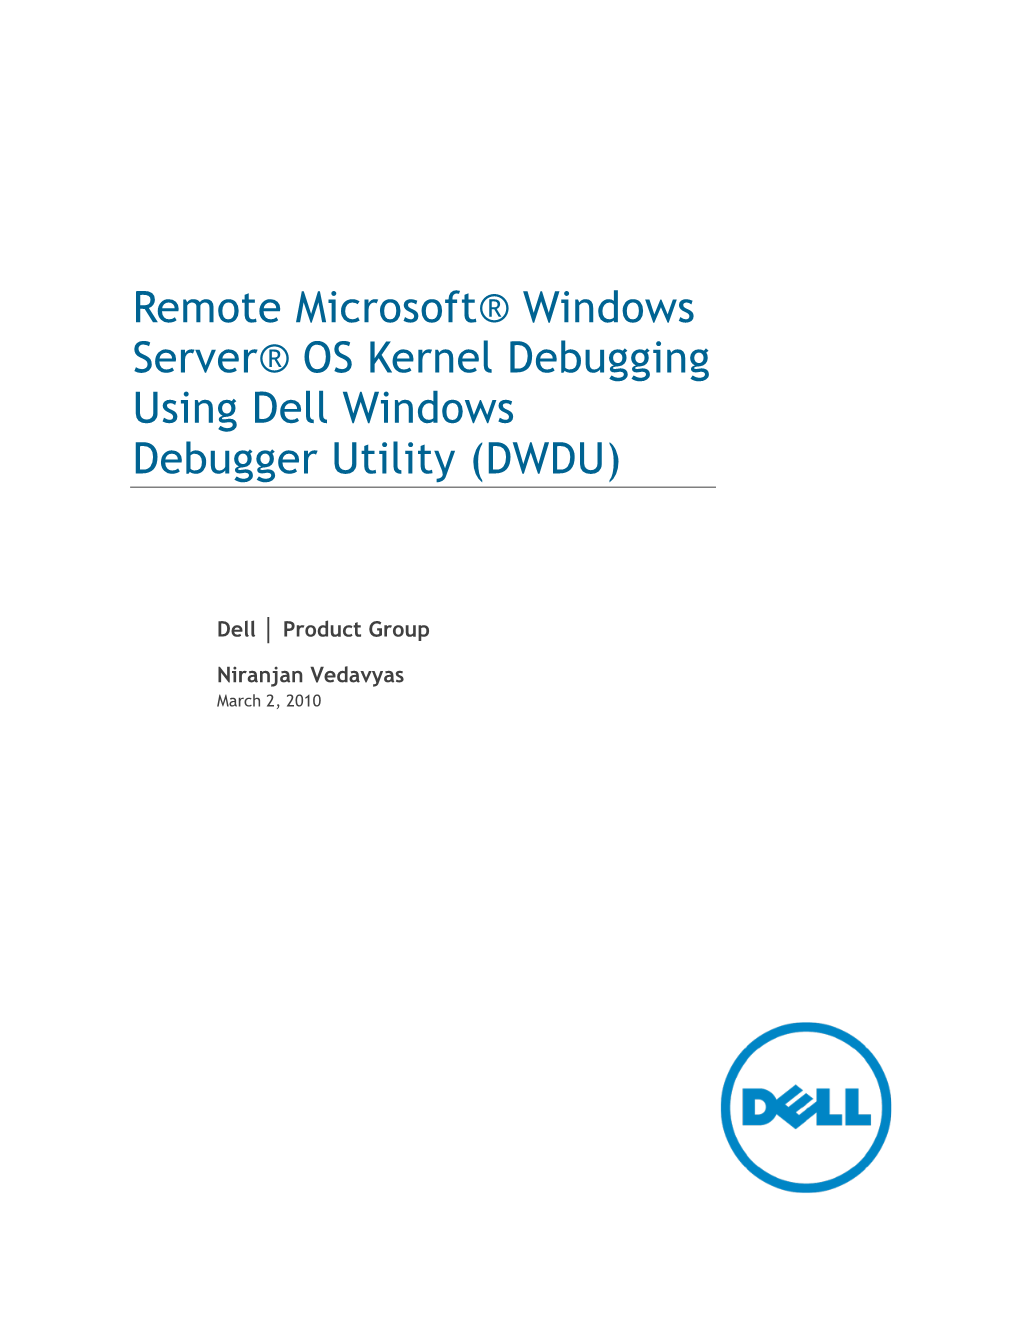 Remote Microsoft® Windows Server® OS Kernel Debugging Using Dell